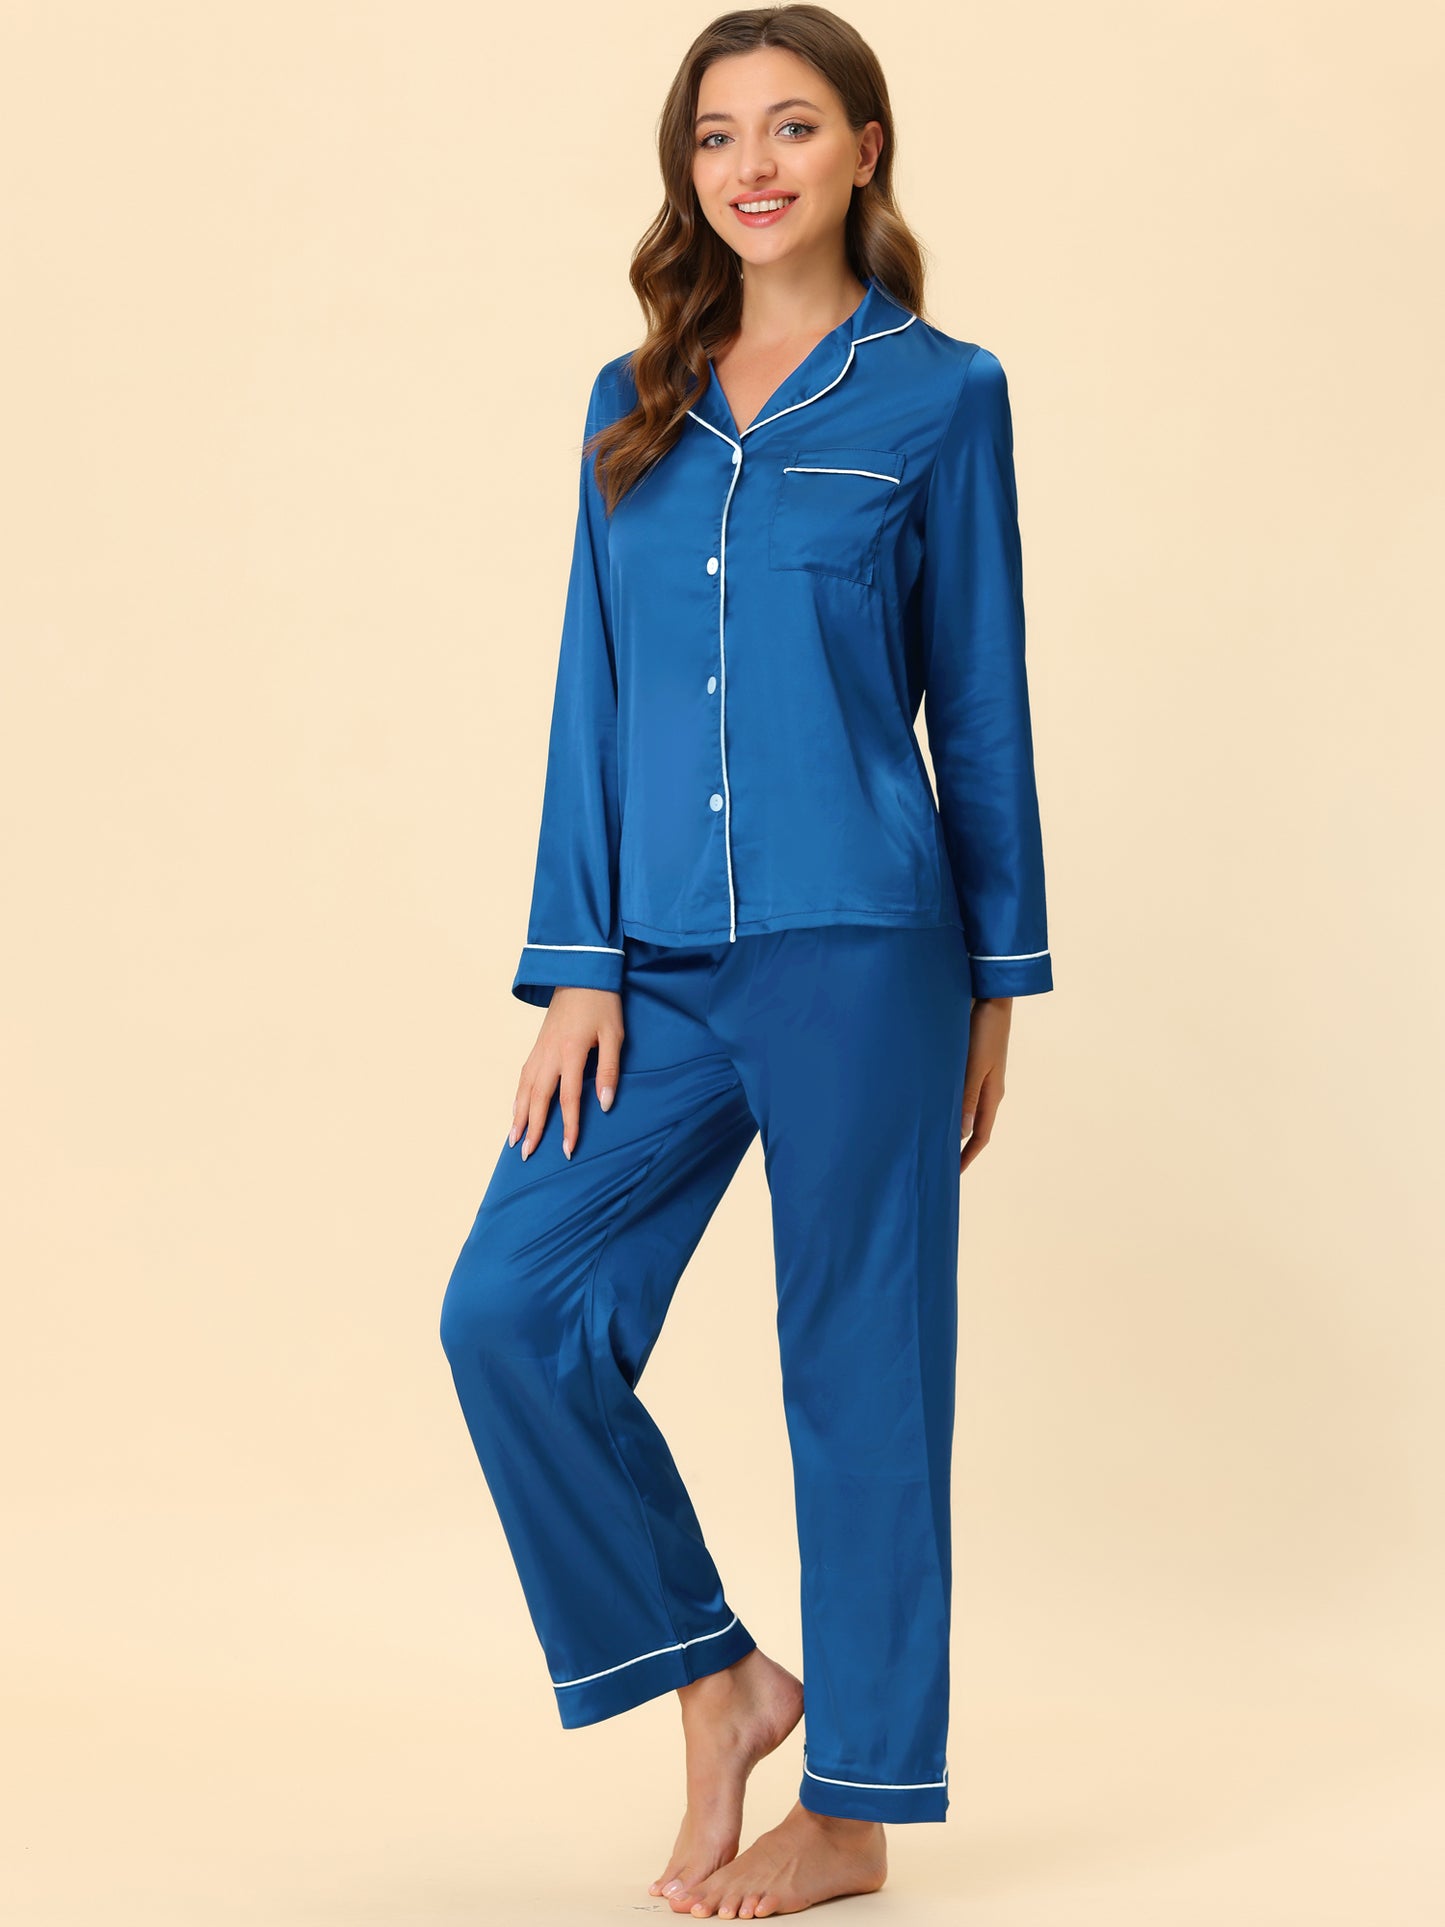 cheibear Pajama Loungewear Long Sleeves Tops and Pants Satin Sets Blue